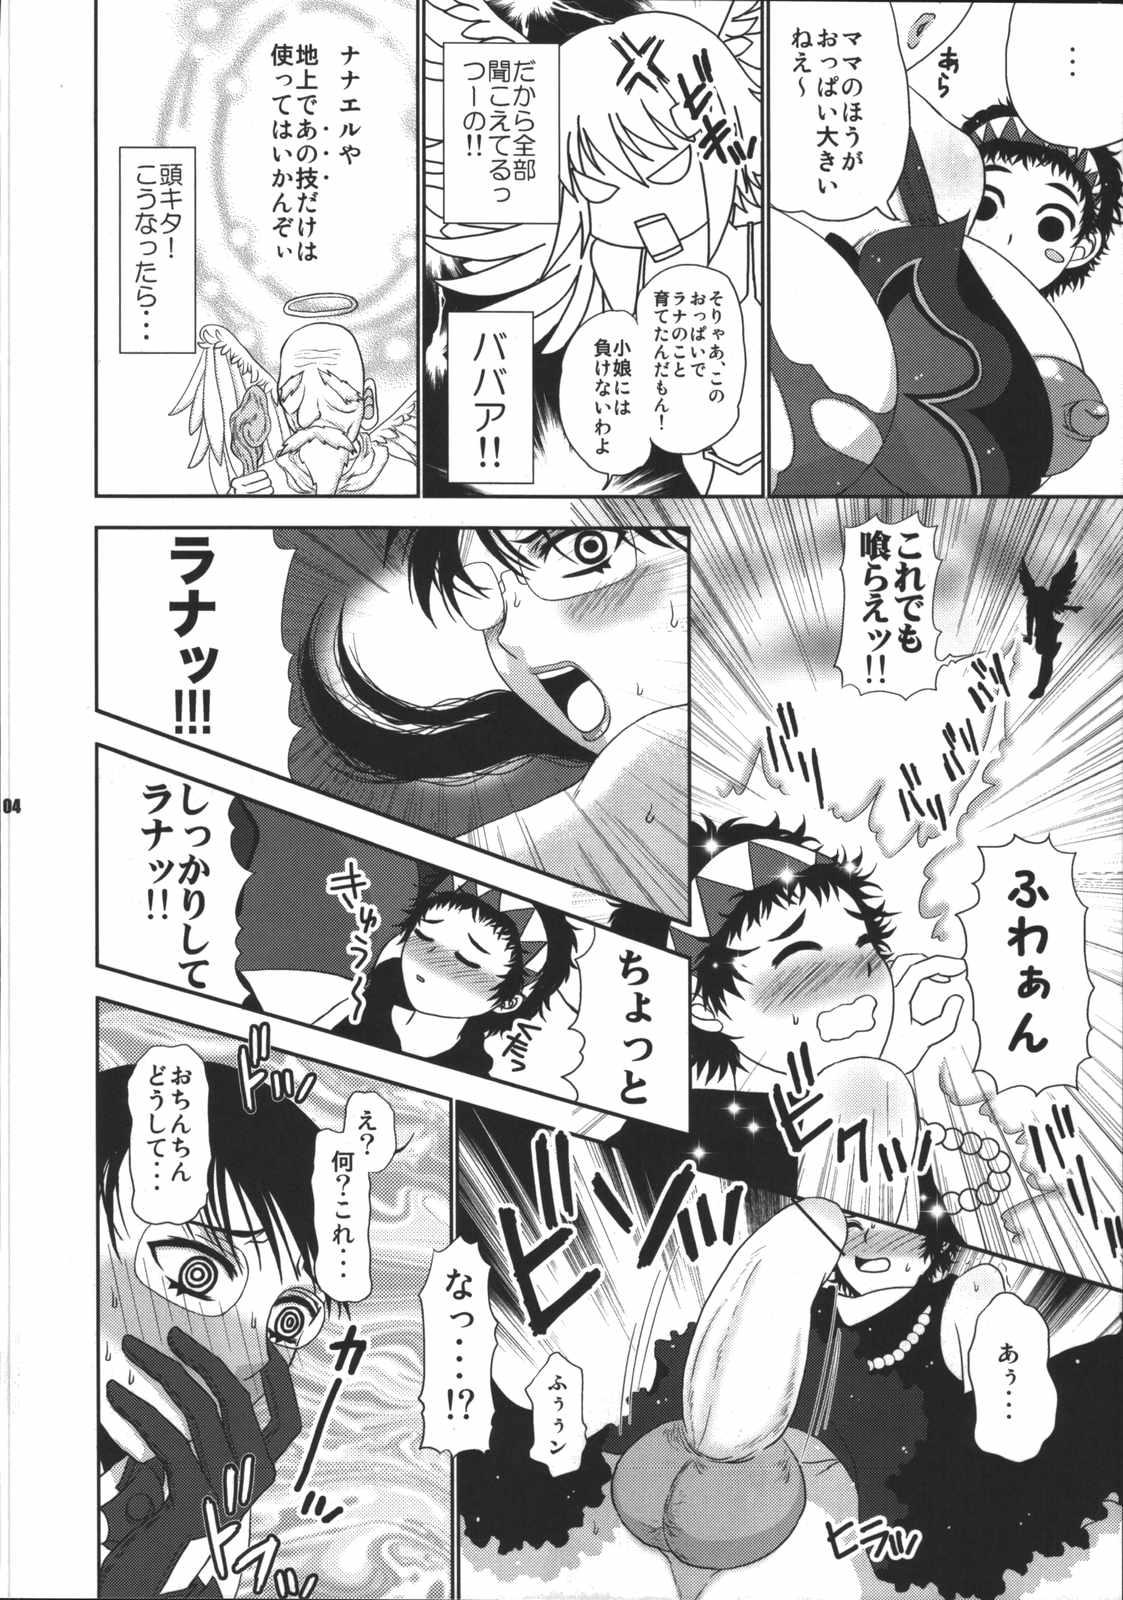 Teens Bukiyazuma no Chitai - Queens blade Cheerleader - Page 3